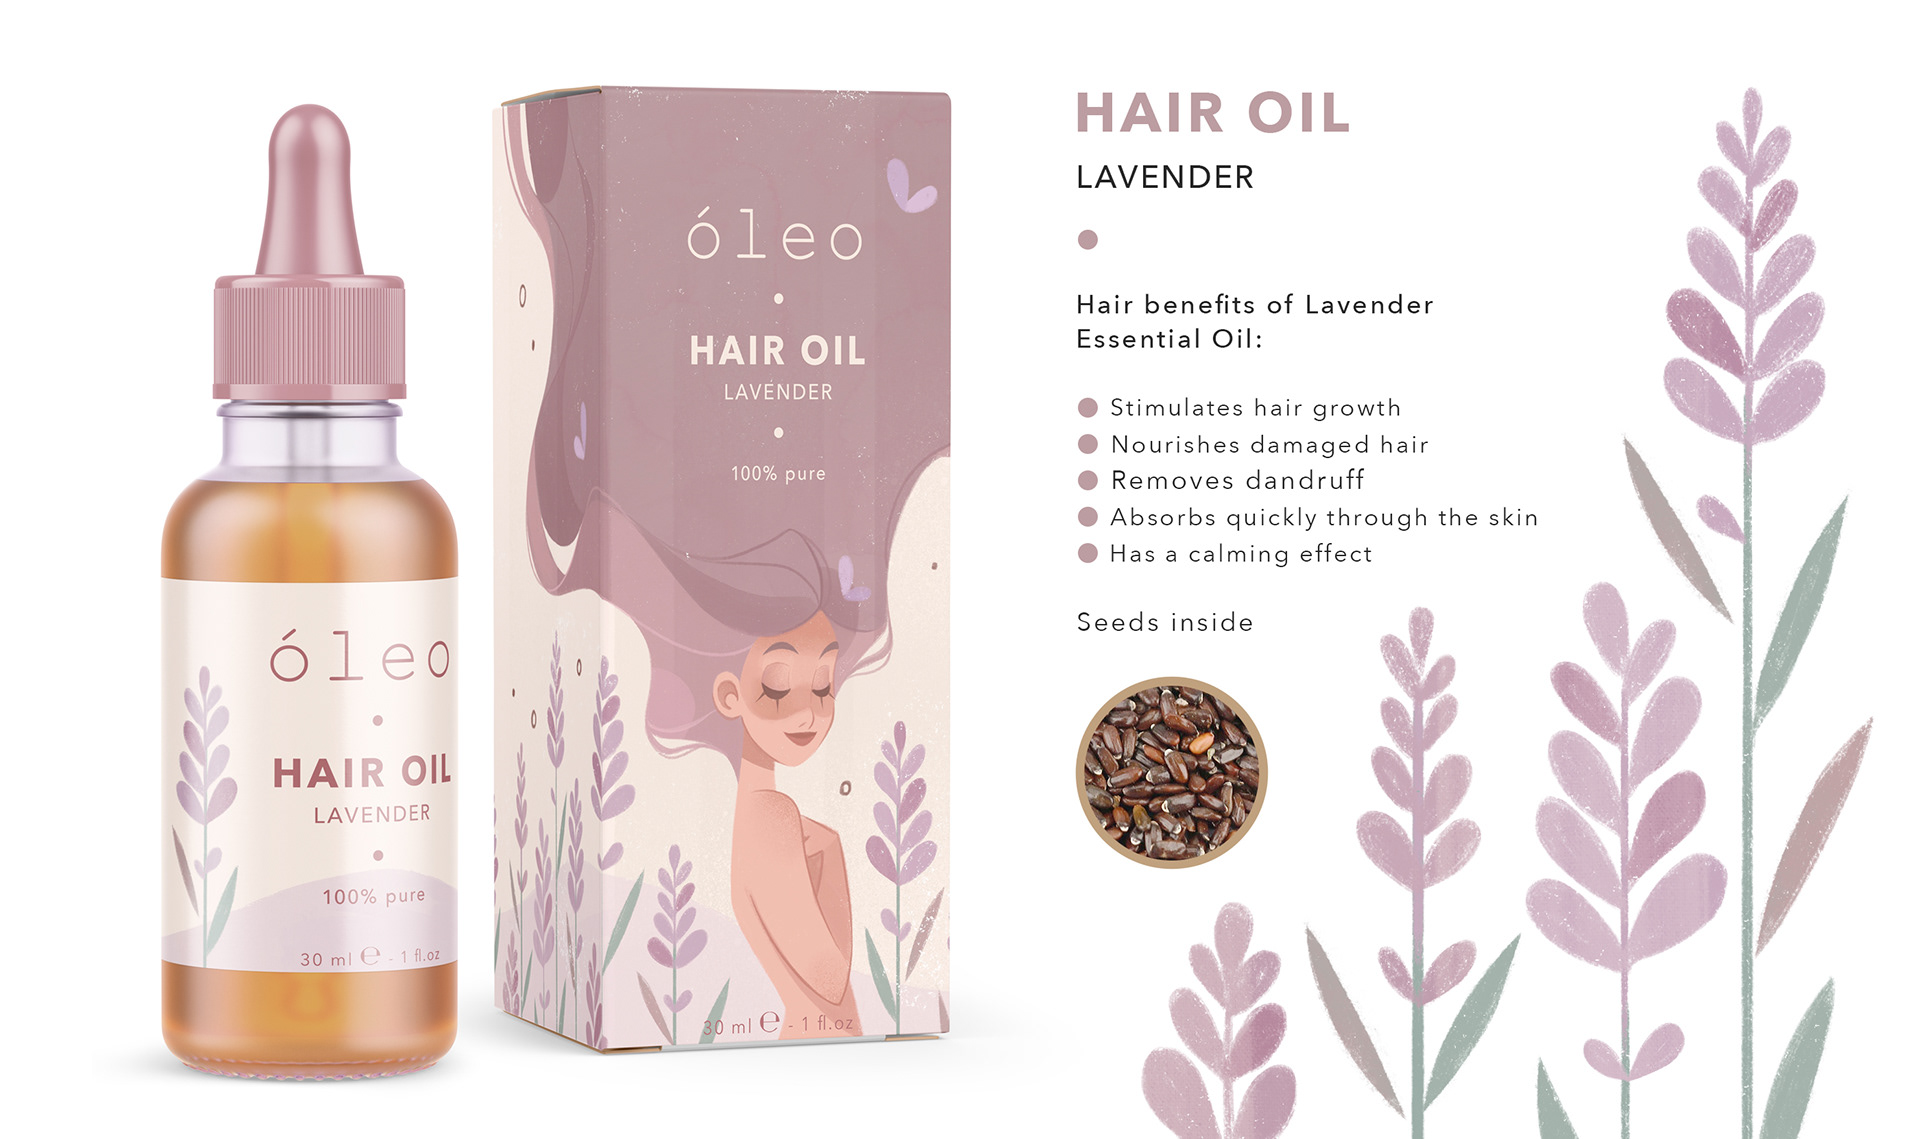 Óleo | Hair oil Packaging Design | Behance